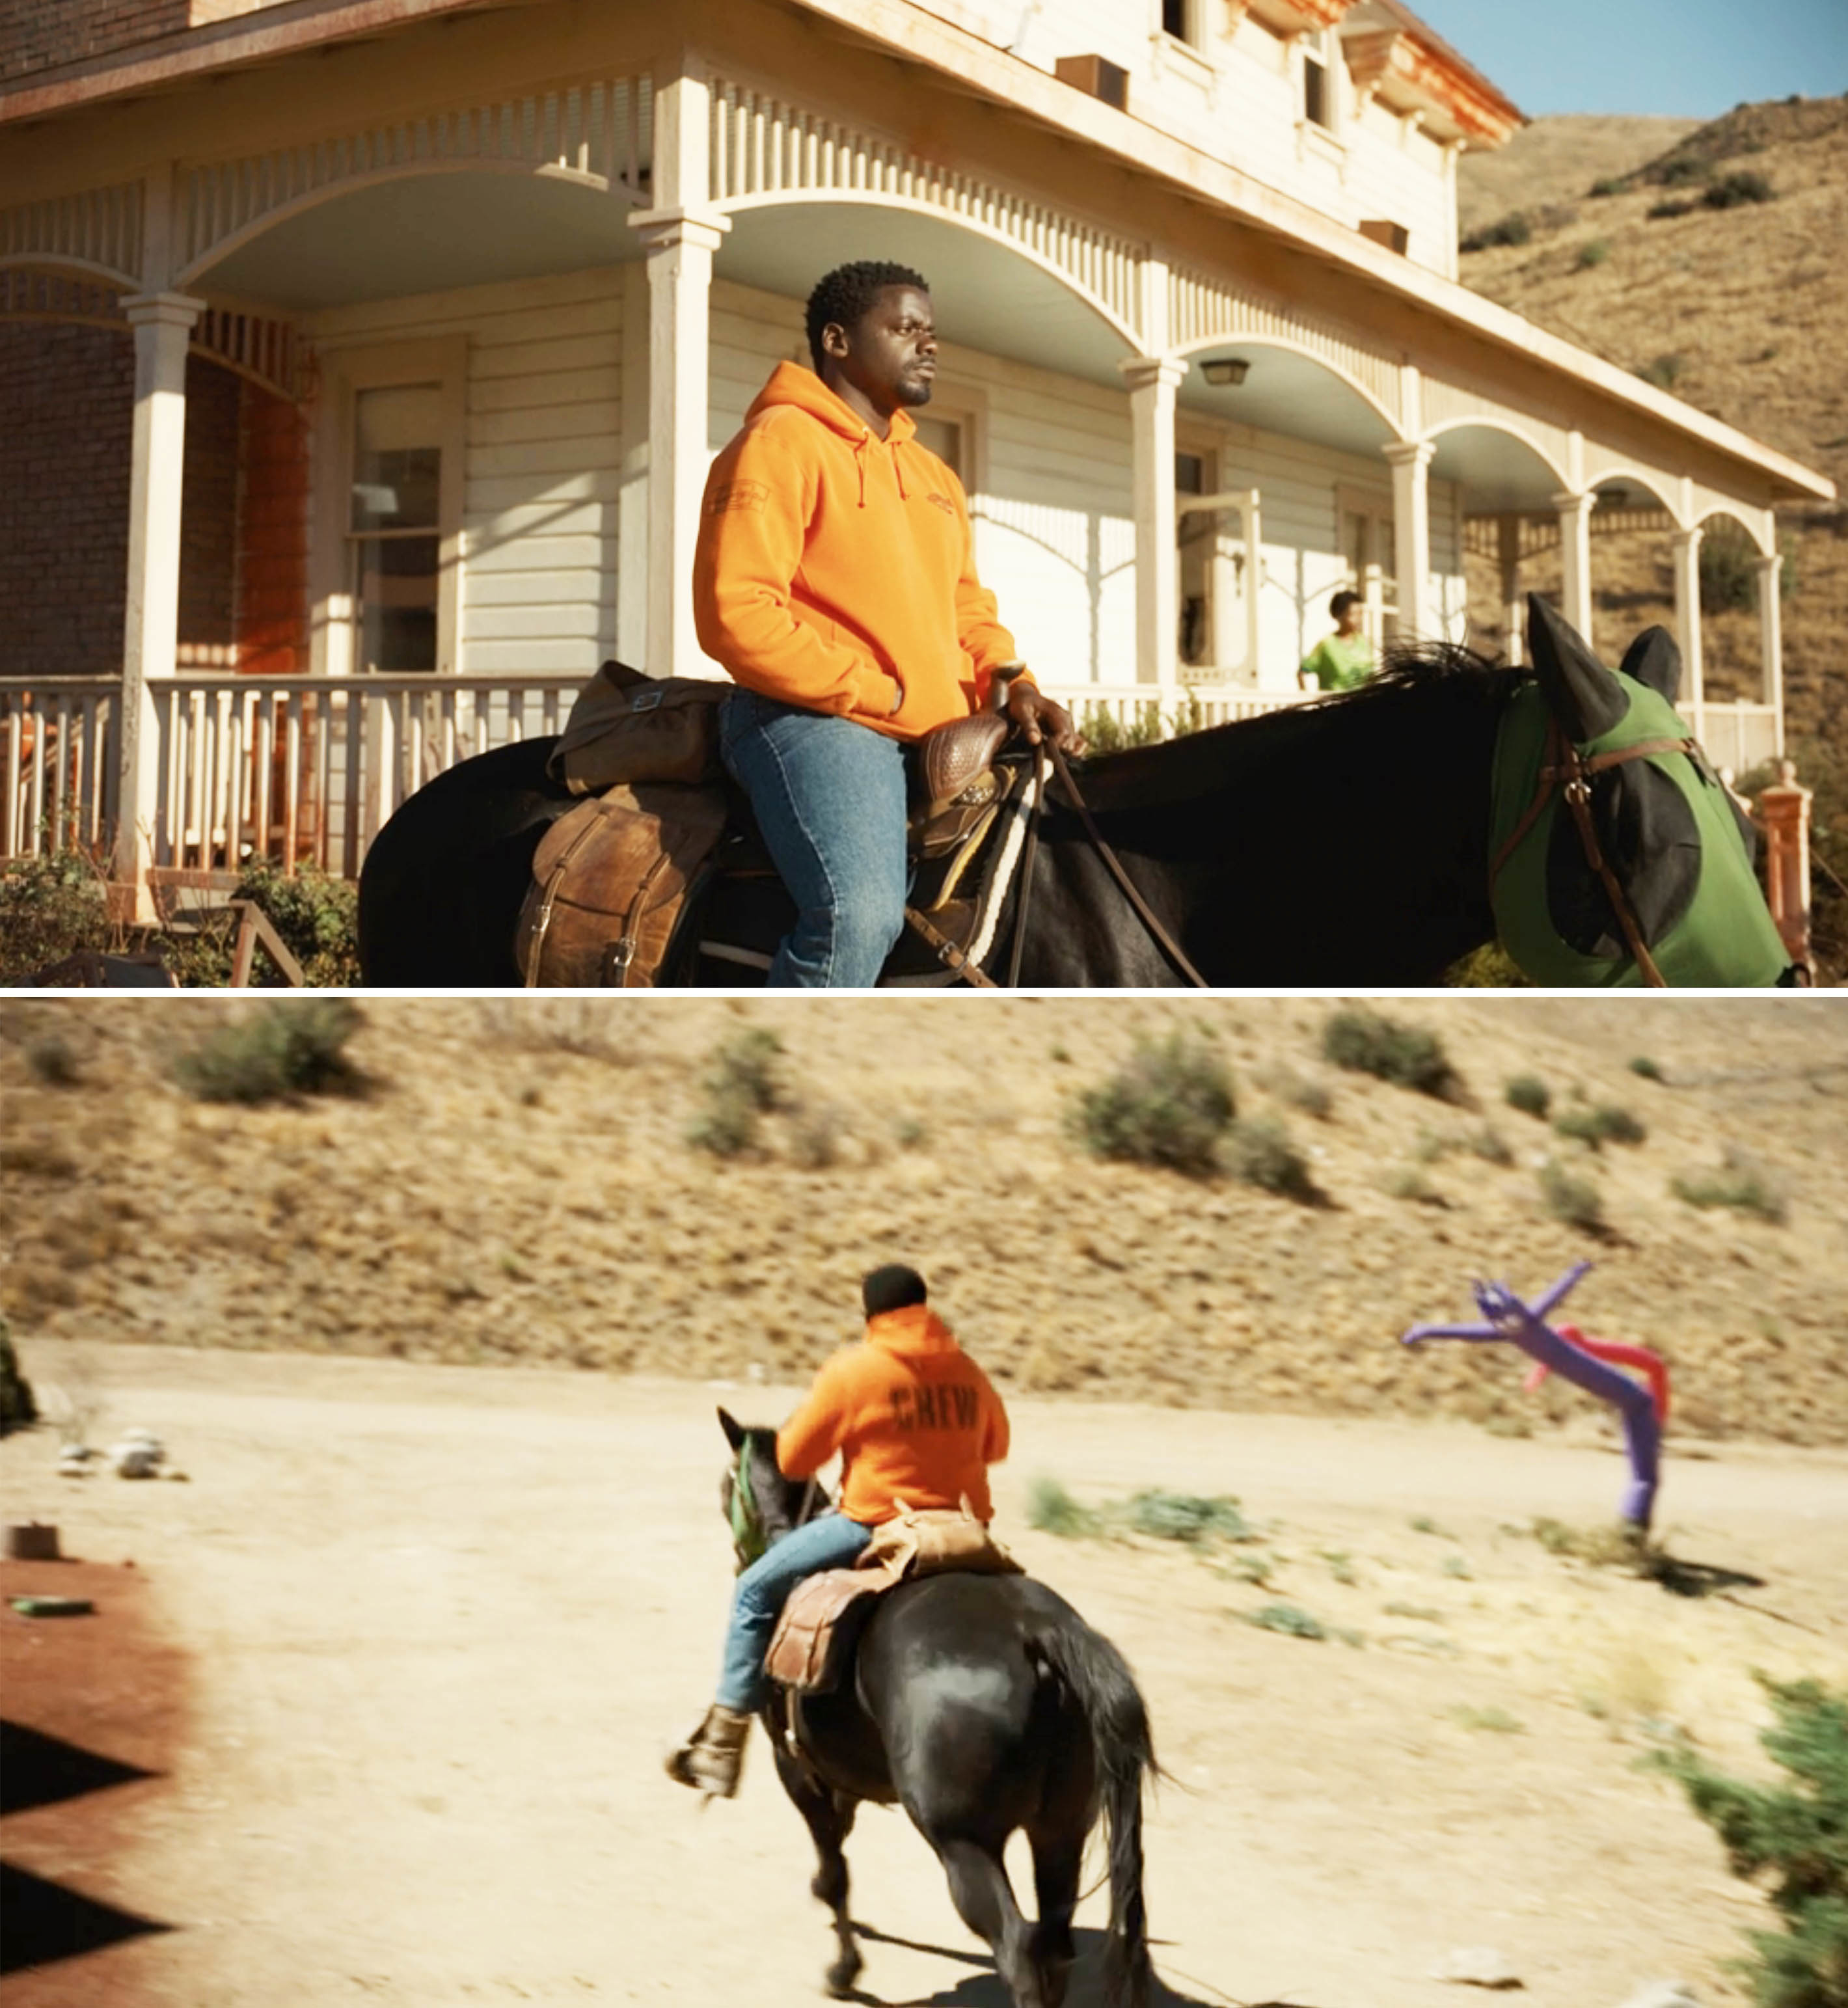 Daniel on horseback near a house